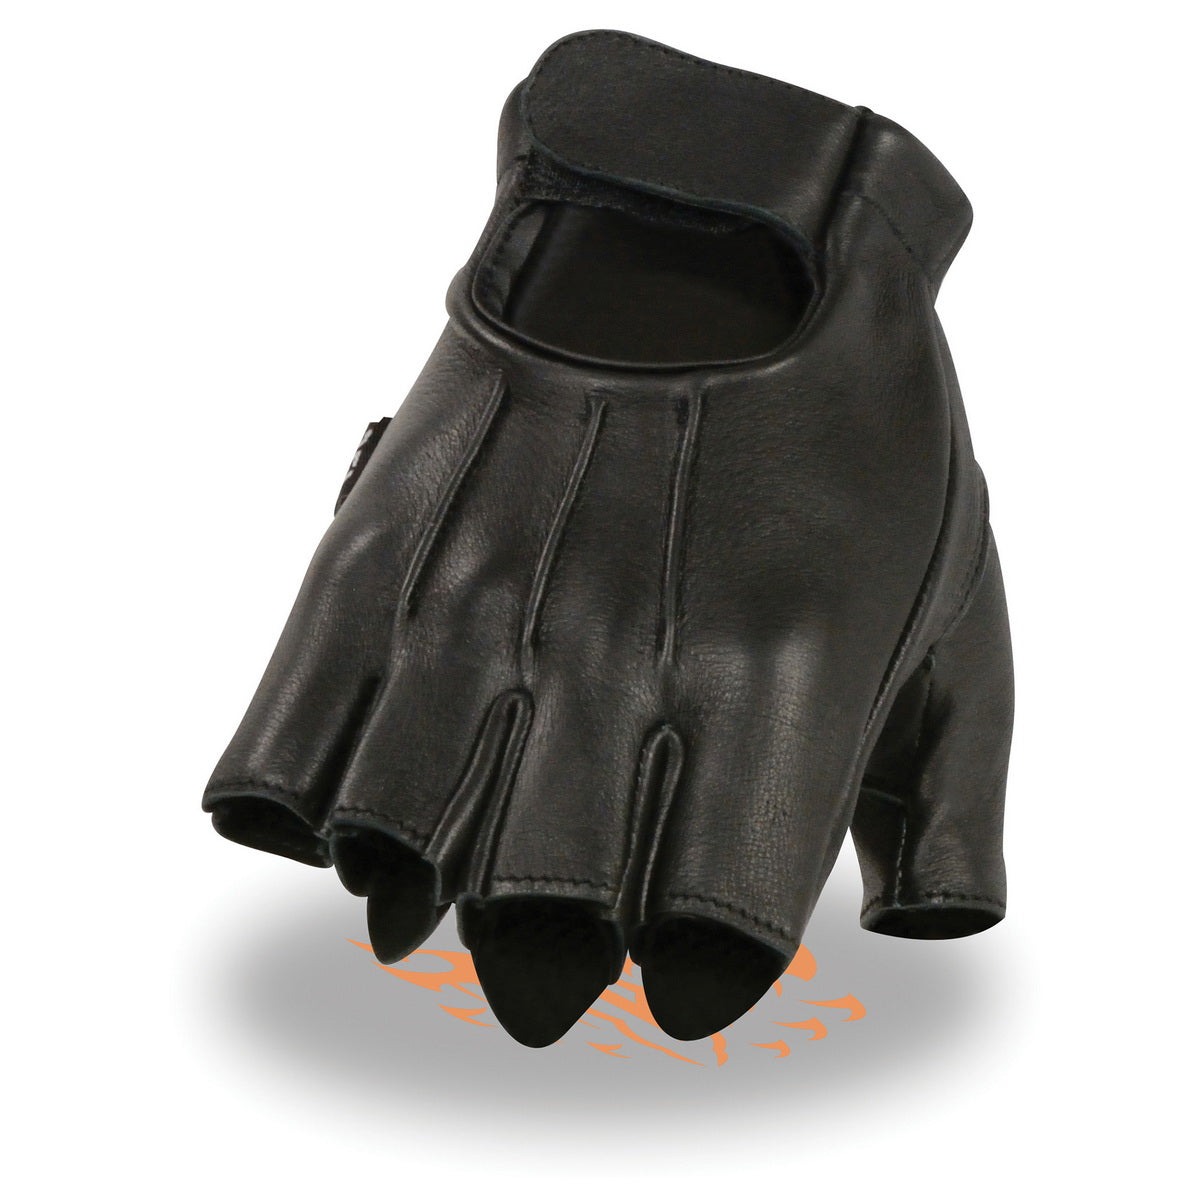 Shaf International SH878 Men's Black Leather Gel Padded Palm Fingerless Motorcycle Hand Gloves ‘Welted Genuine USA Deerskin’